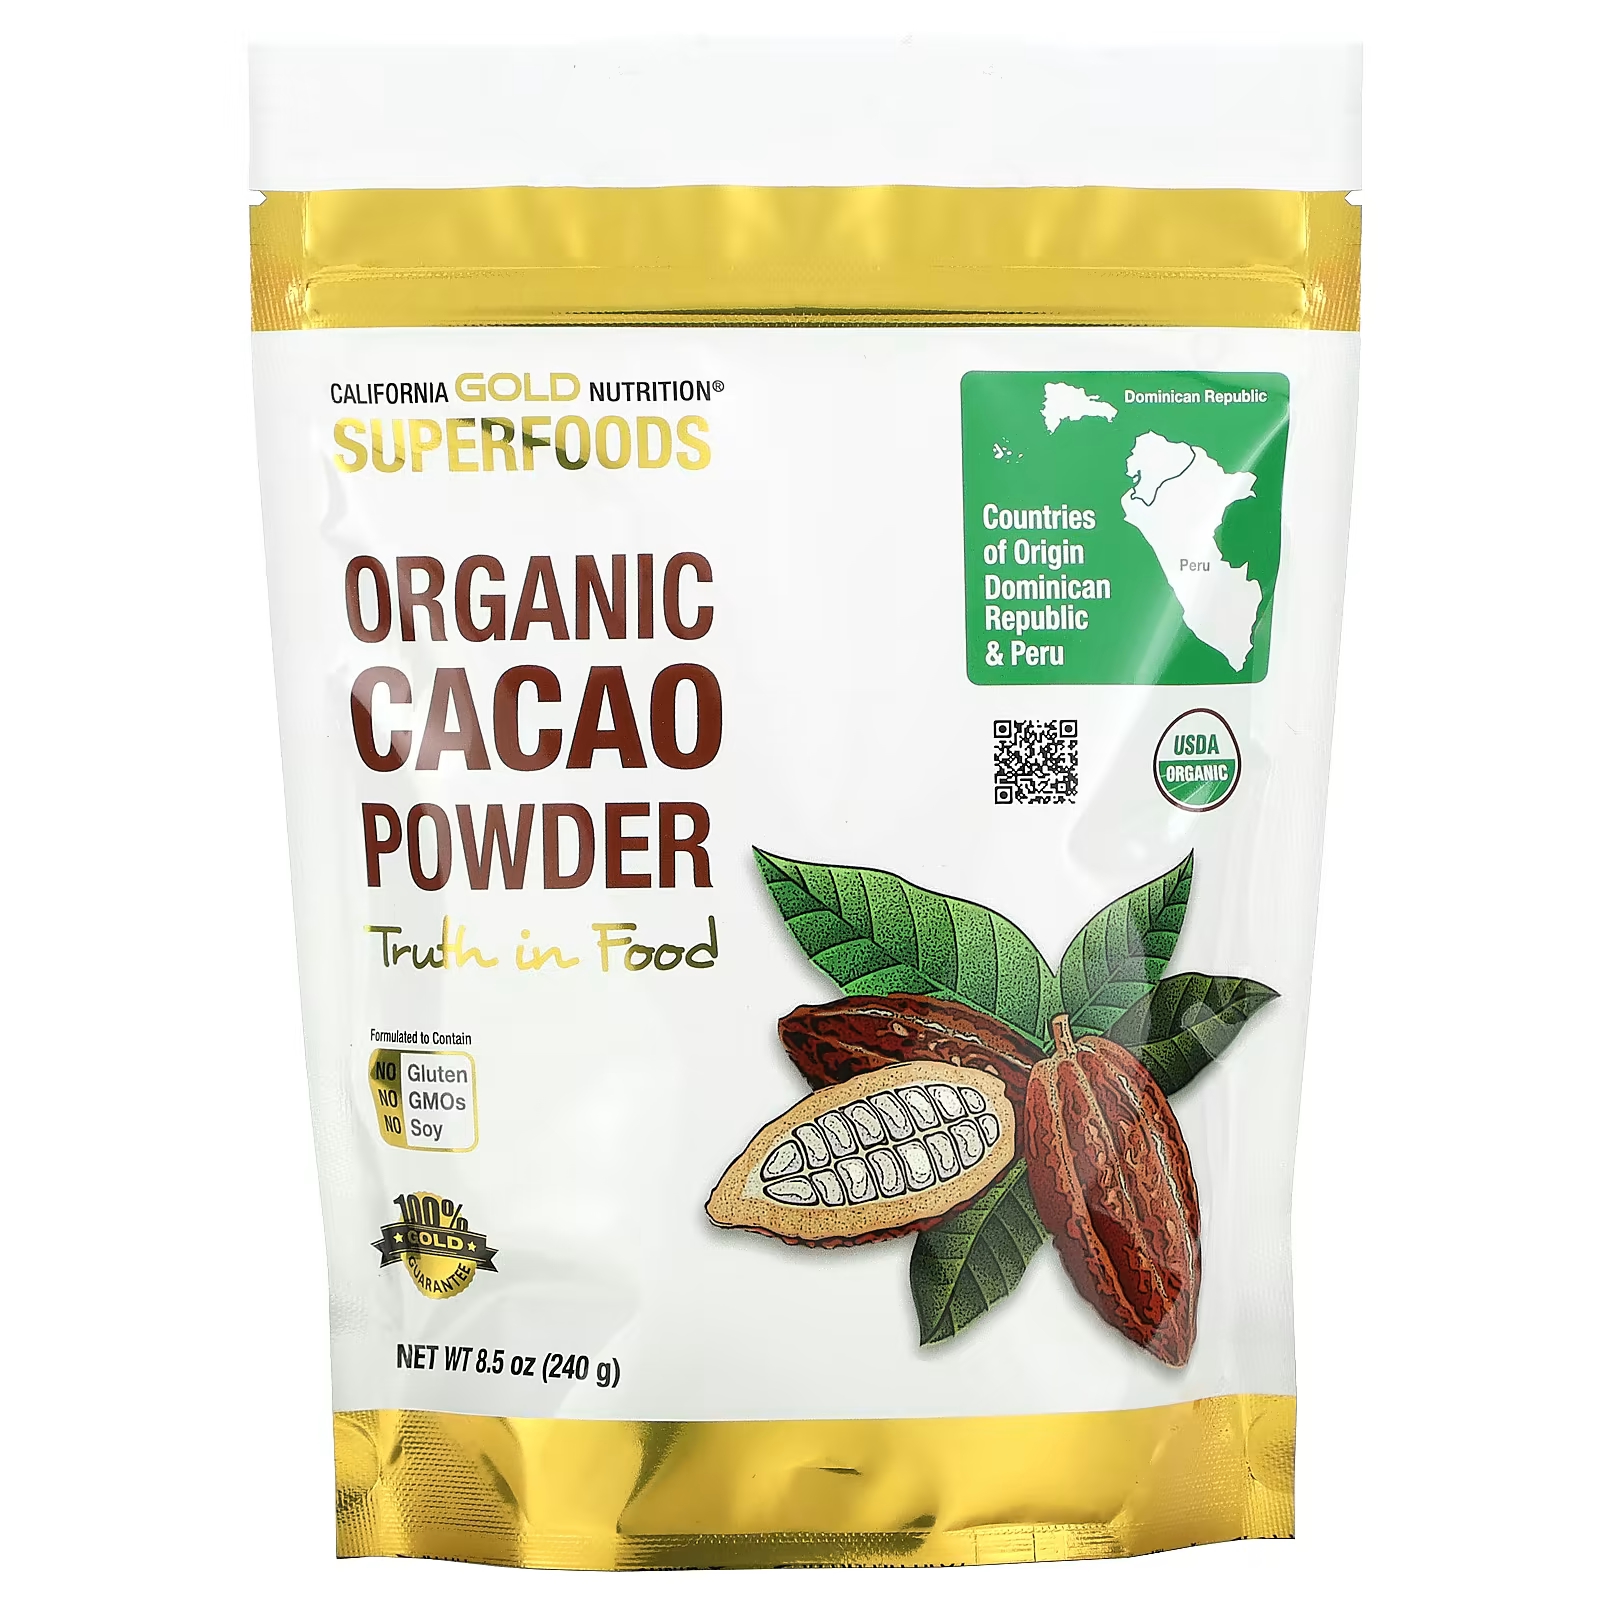 SUPERFOODS — Органический какао-порошок, 8,5 унций (240 г) California Gold Nutrition california gold nutrition superfoods органические семена чиа 12 унций 340 г